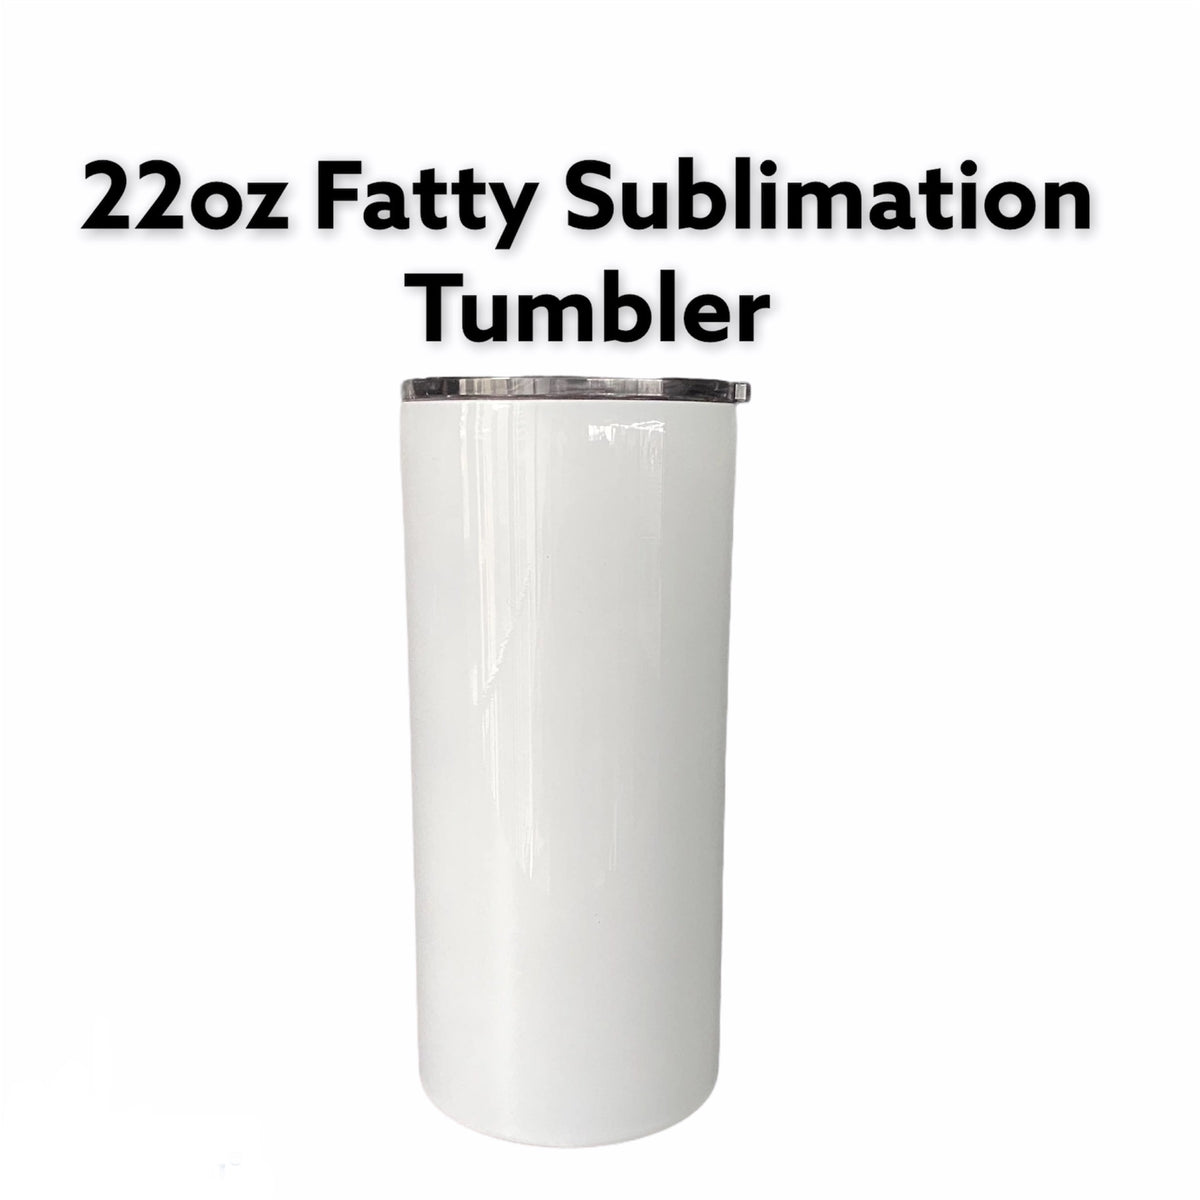 22 oz fatty tumbler,22 oz fatty tumbler sublimation measurements